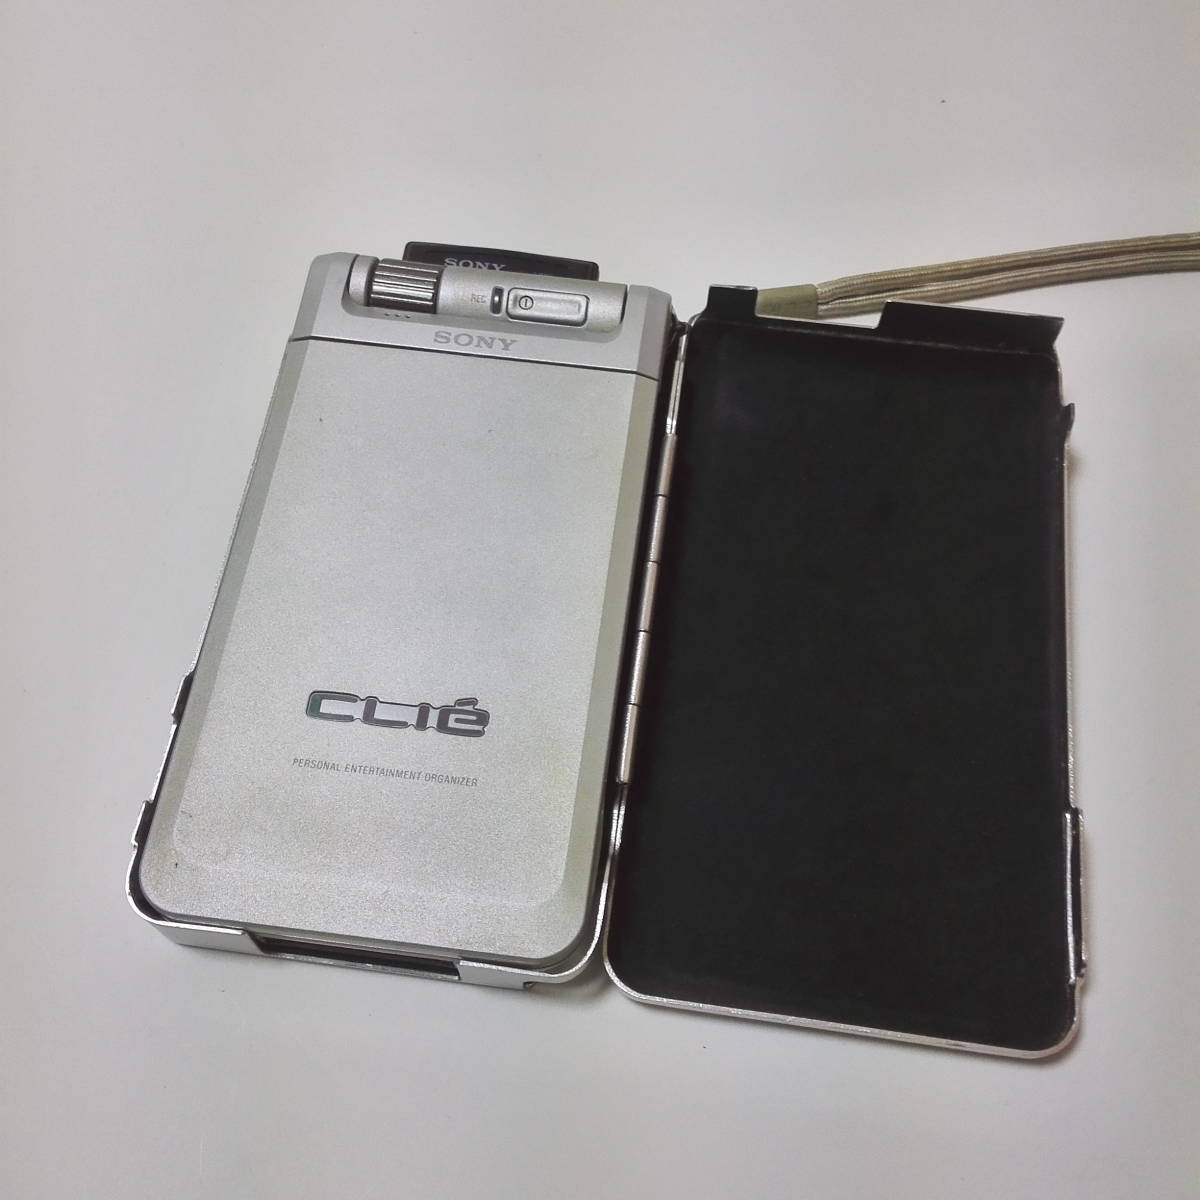 [ operation verification settled ]Sony CLie PEG-NX70V Sony klieWireless card PEGA-WL100 cover memory stick Memory Stick